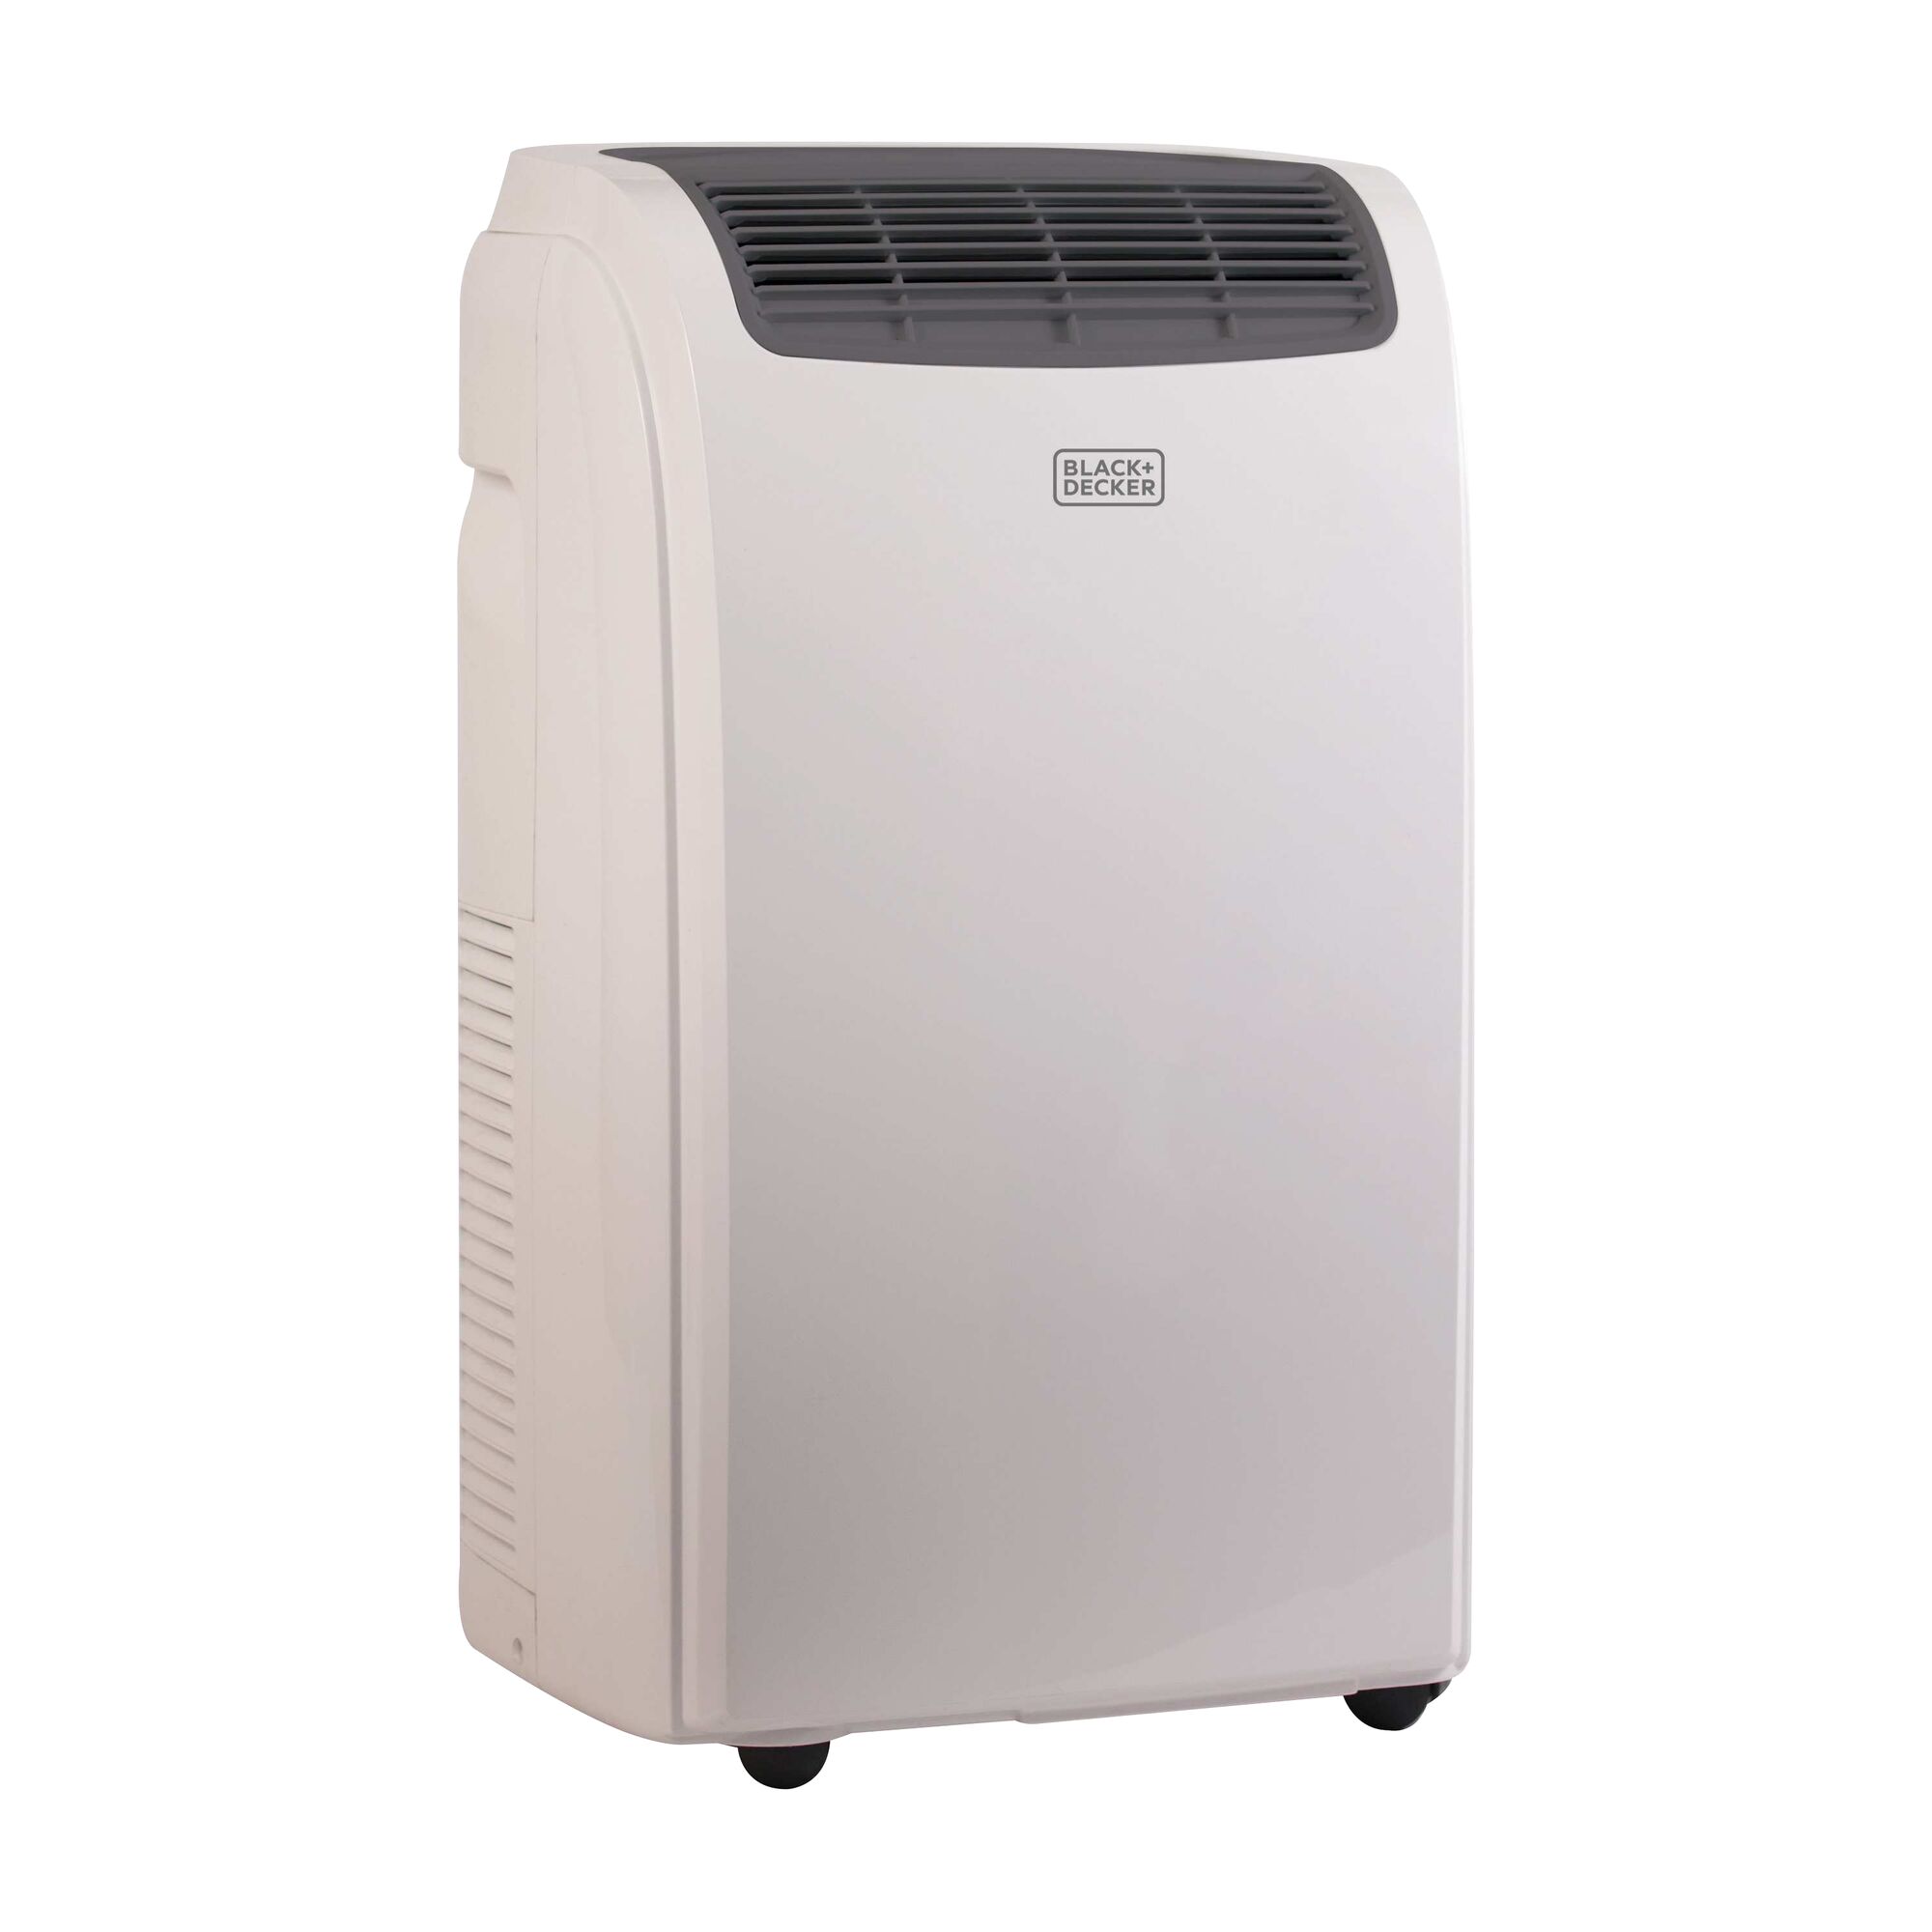 7700 BTU Portable Air Conditioner with Heat.